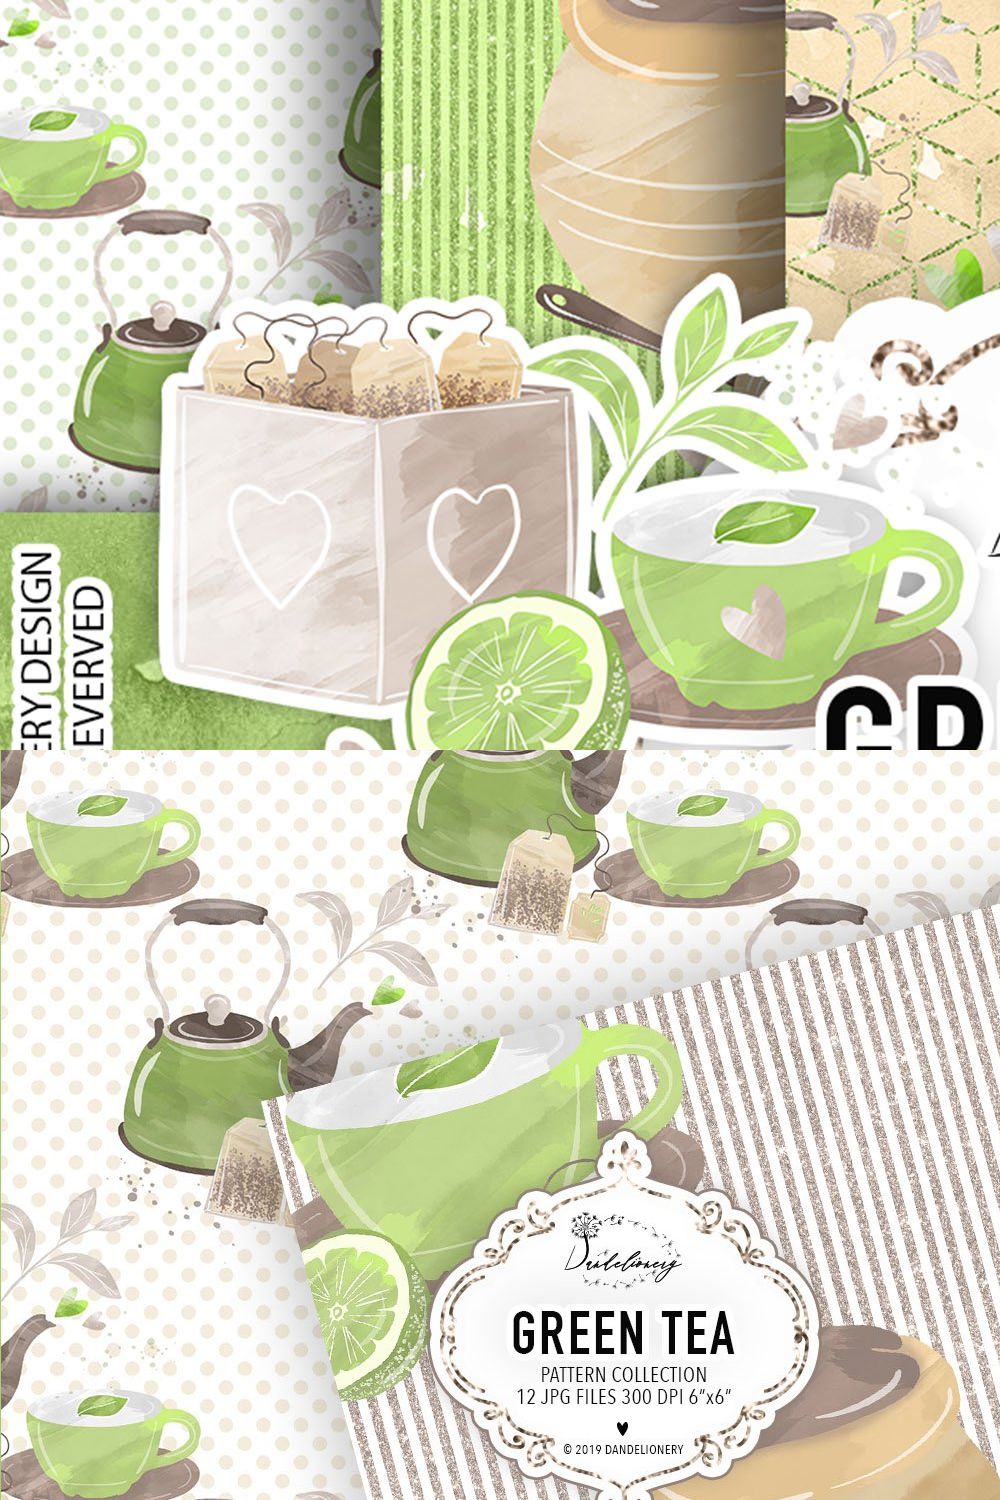 Green Tea digital paper pack pinterest preview image.